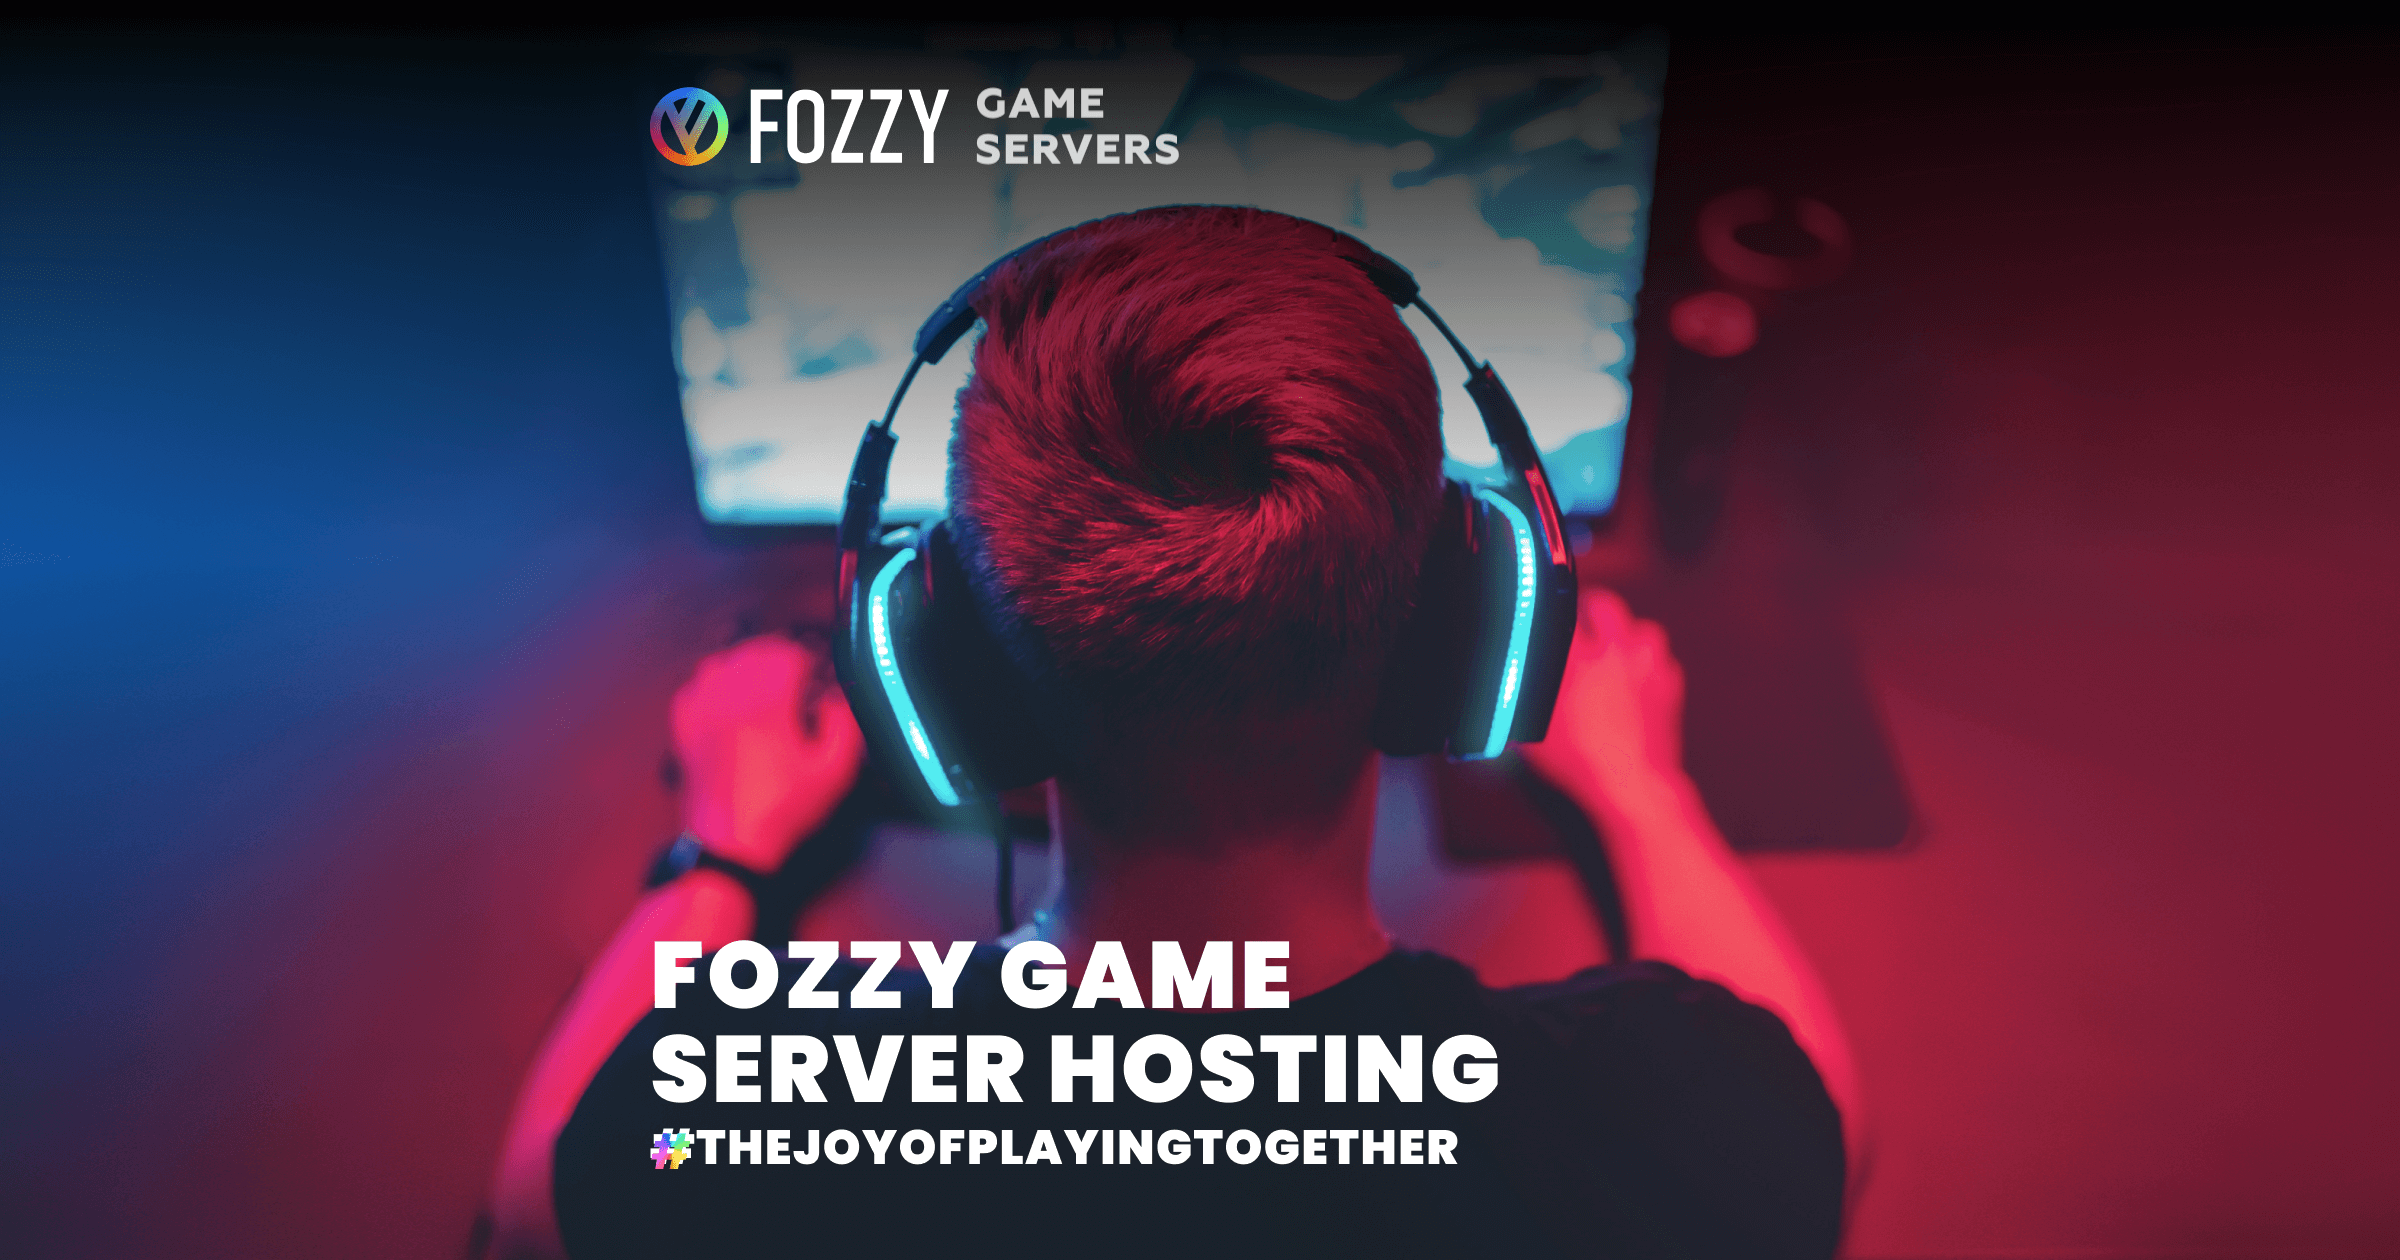 (c) Games.fozzy.com